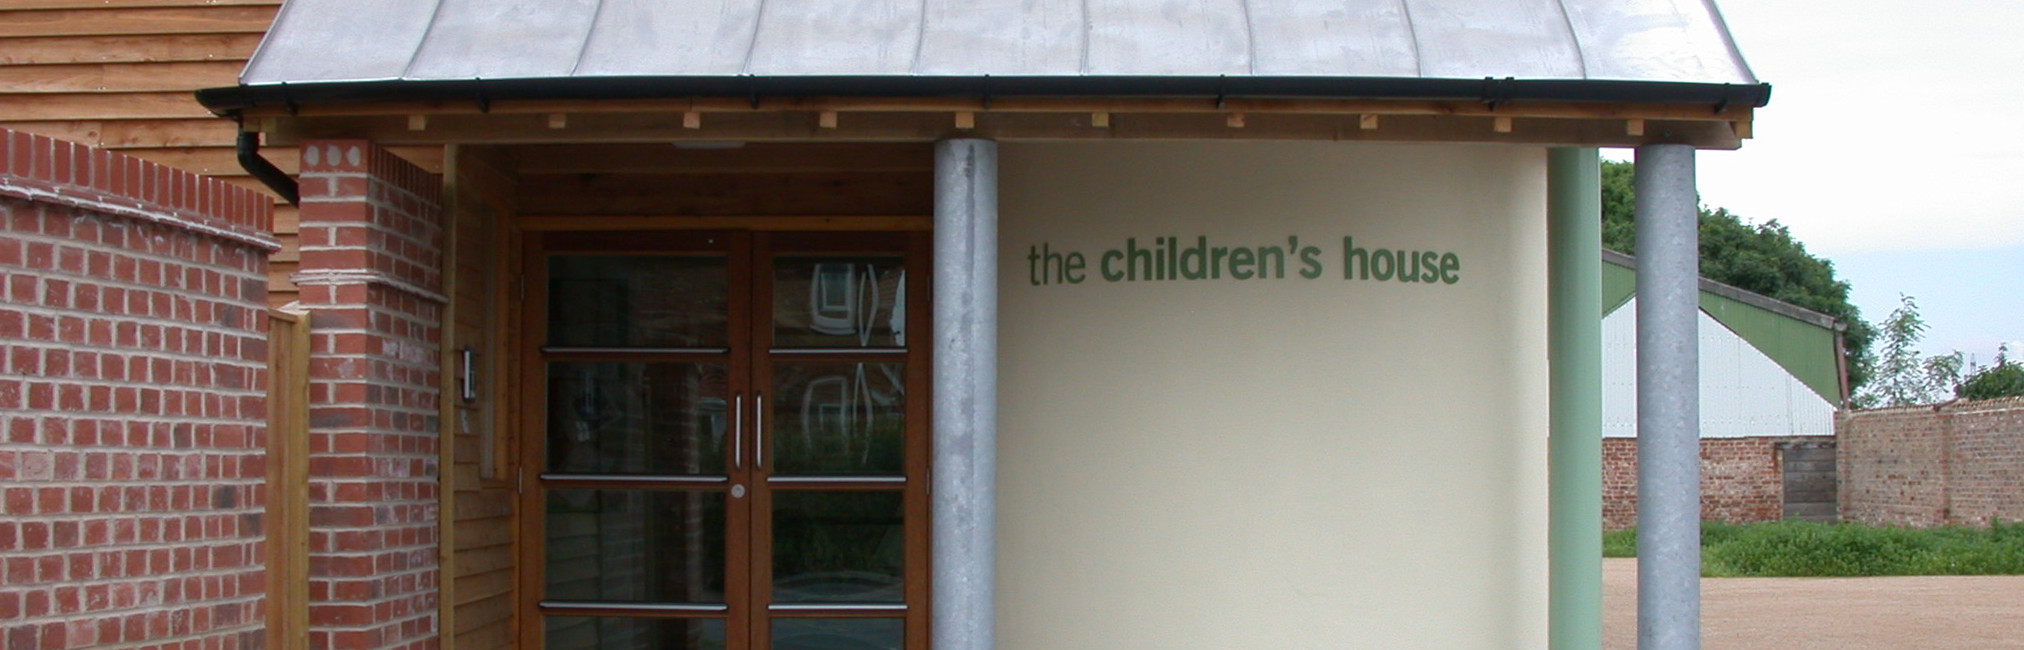 (c) Thechildrenshouse.org.uk